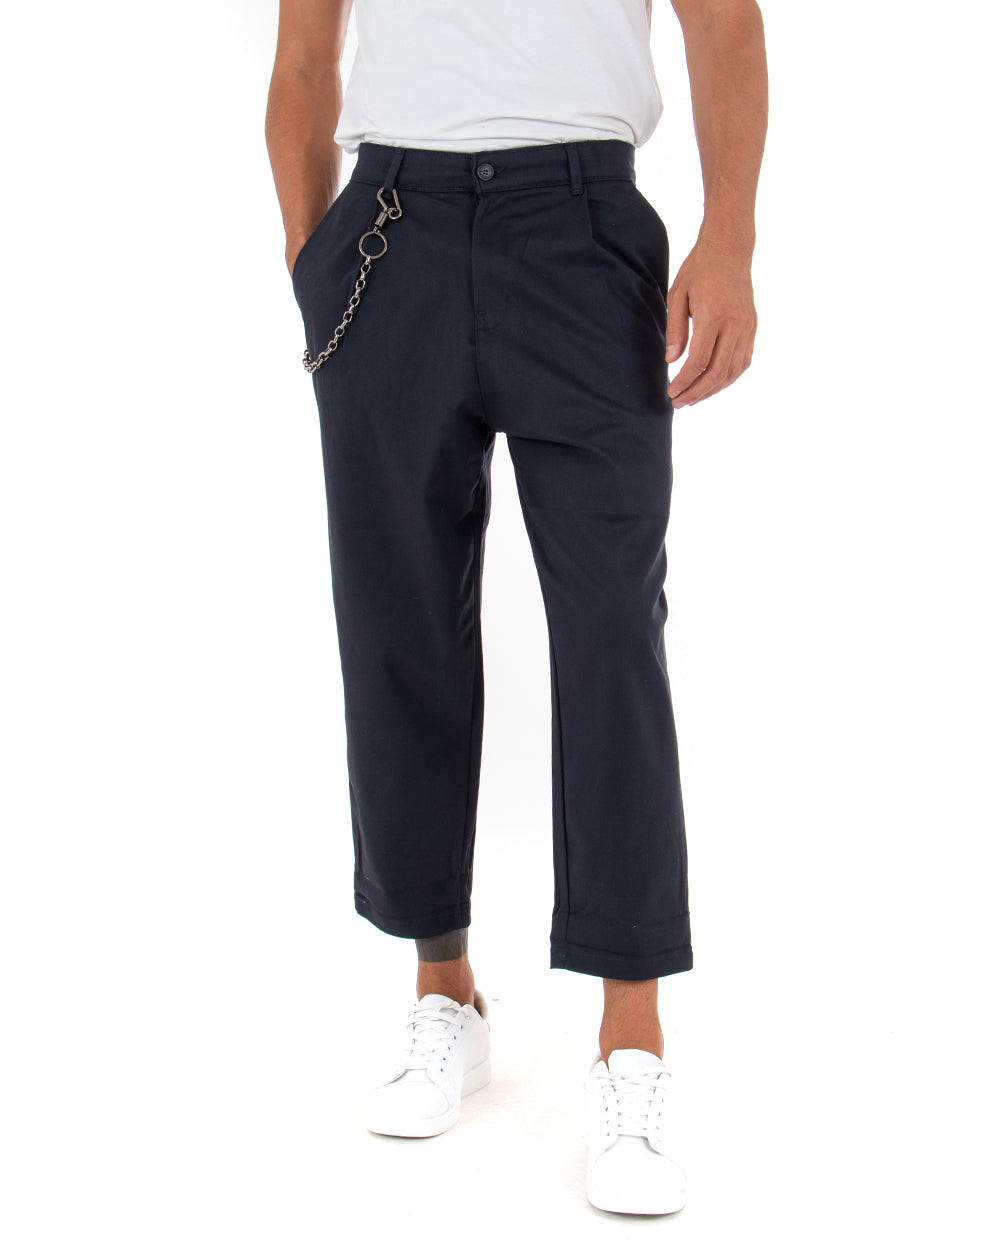 Pantaloni Uomo Lungo Tinta Unita Blu Wide Fit Catena Pinces GIOSAL-P3979A